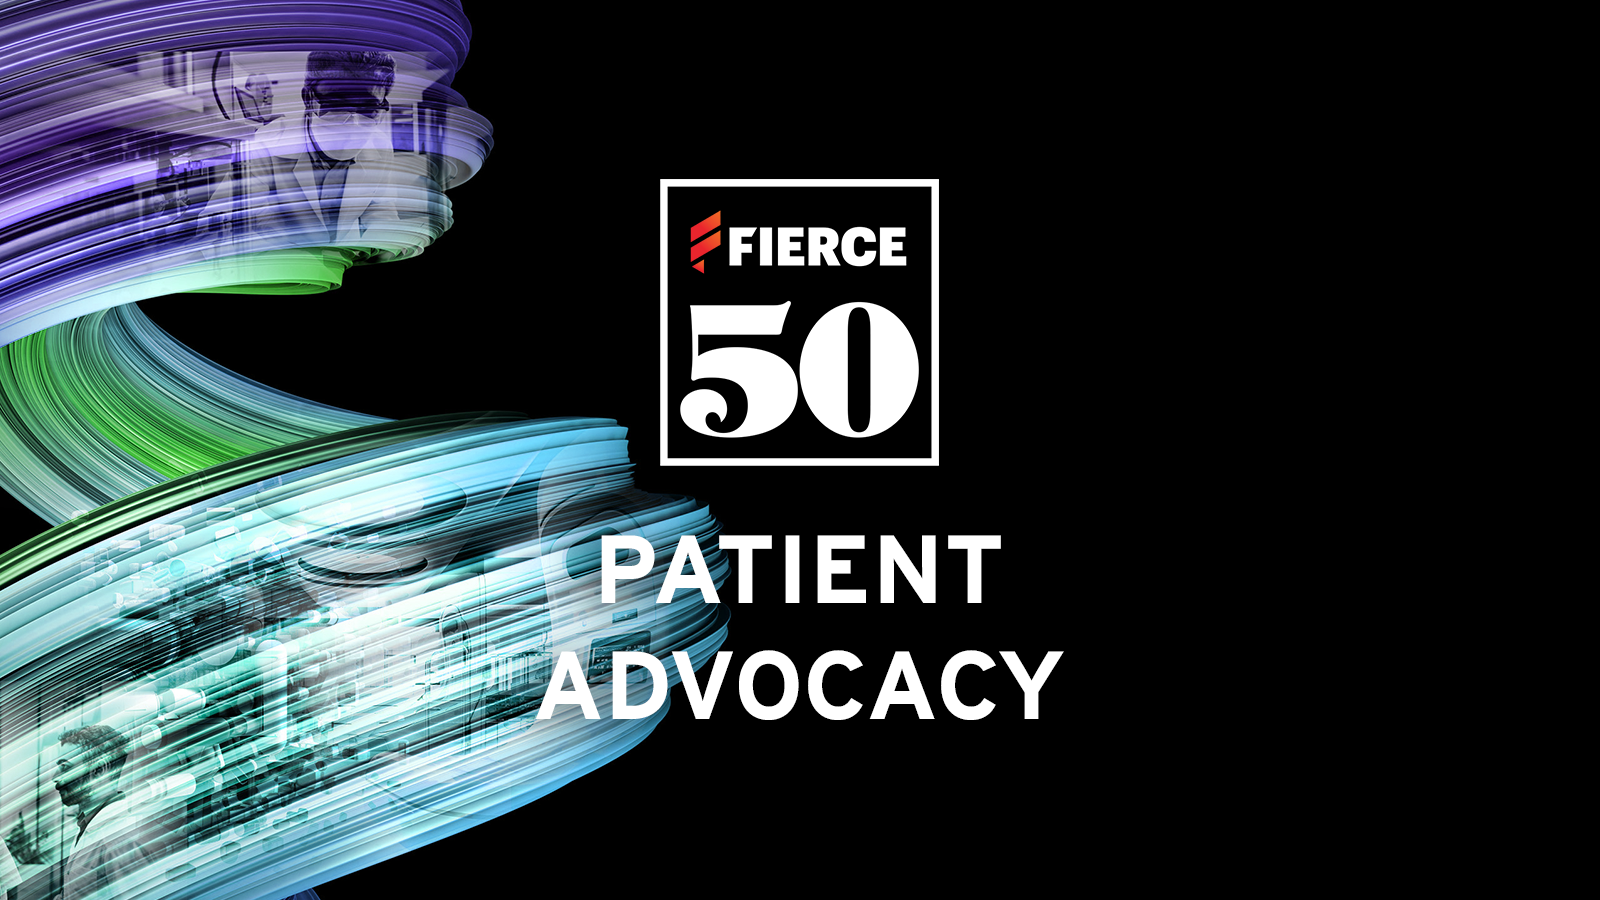 Fierce 50 honorees - Patient Advocacy 